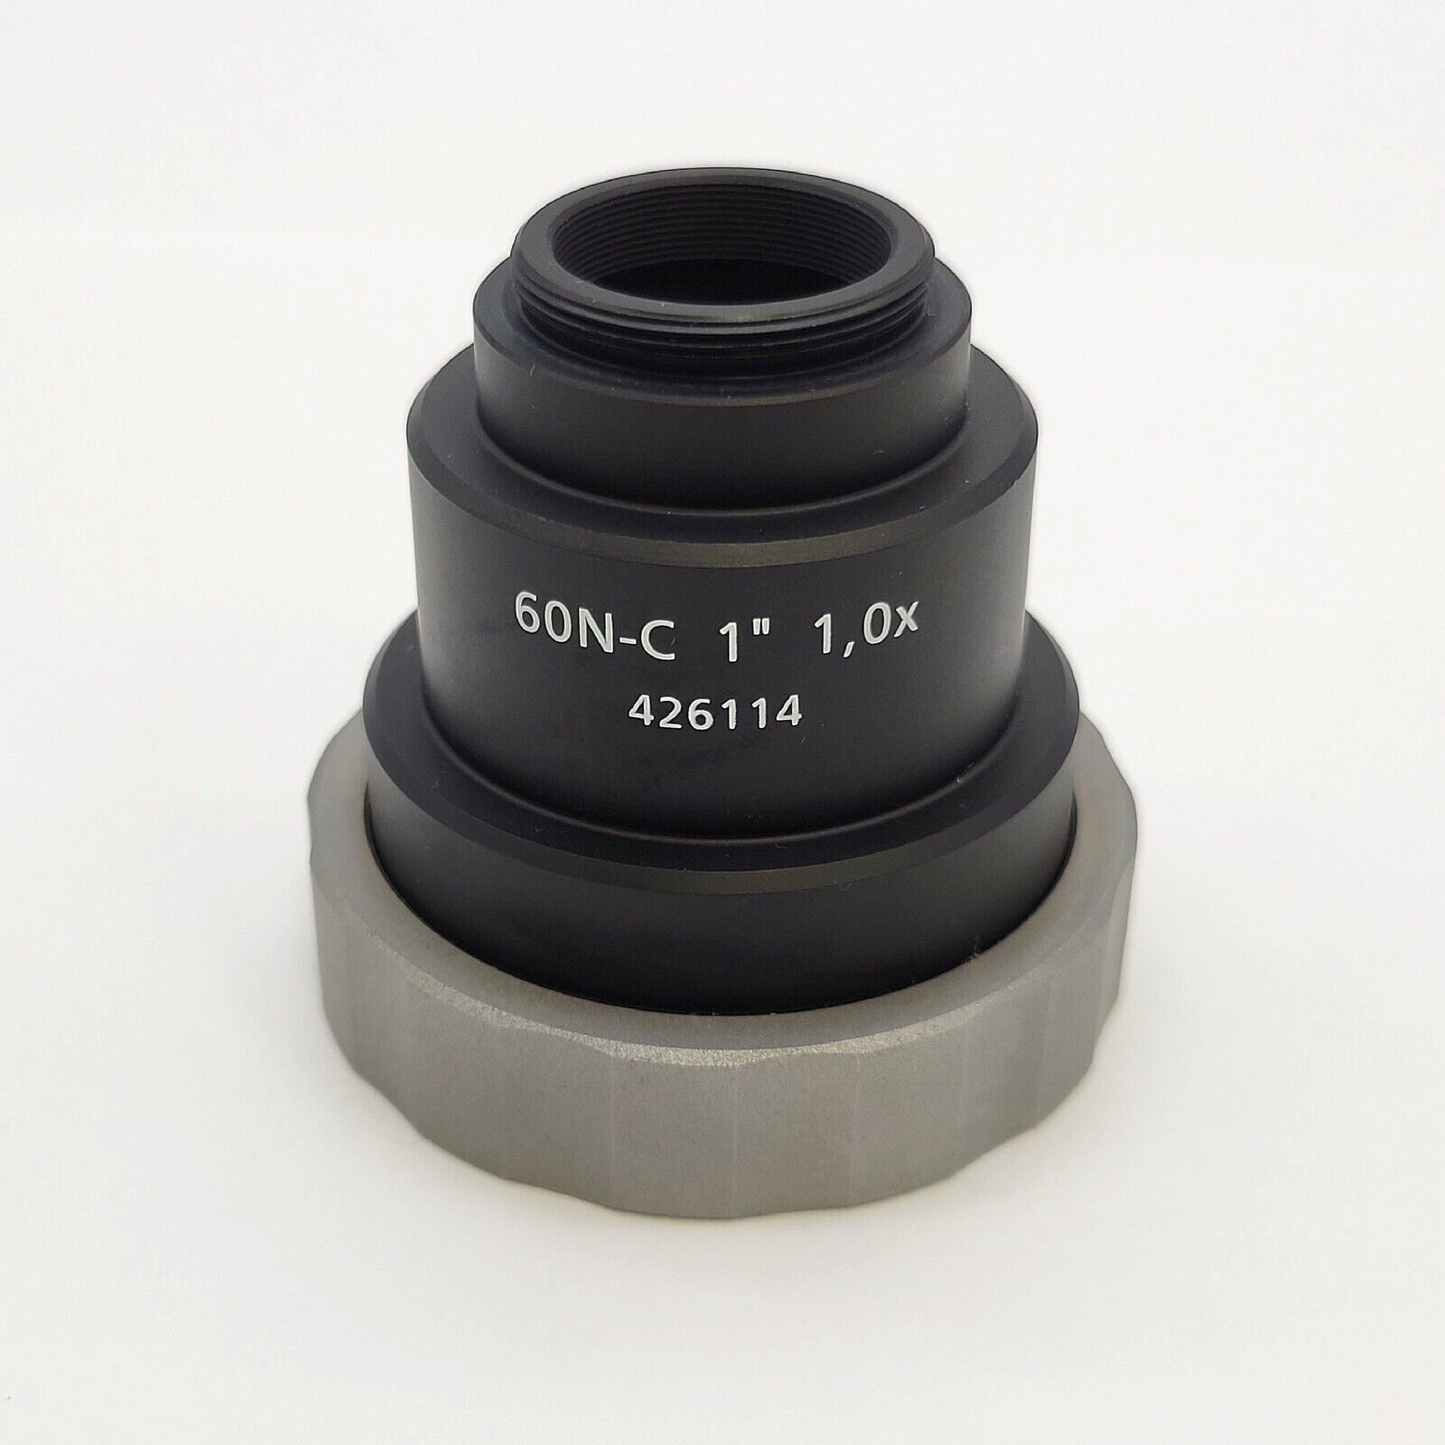 Zeiss Microscope Camera Adapter 60N-C 1" 1.0x 426114 - microscopemarketplace